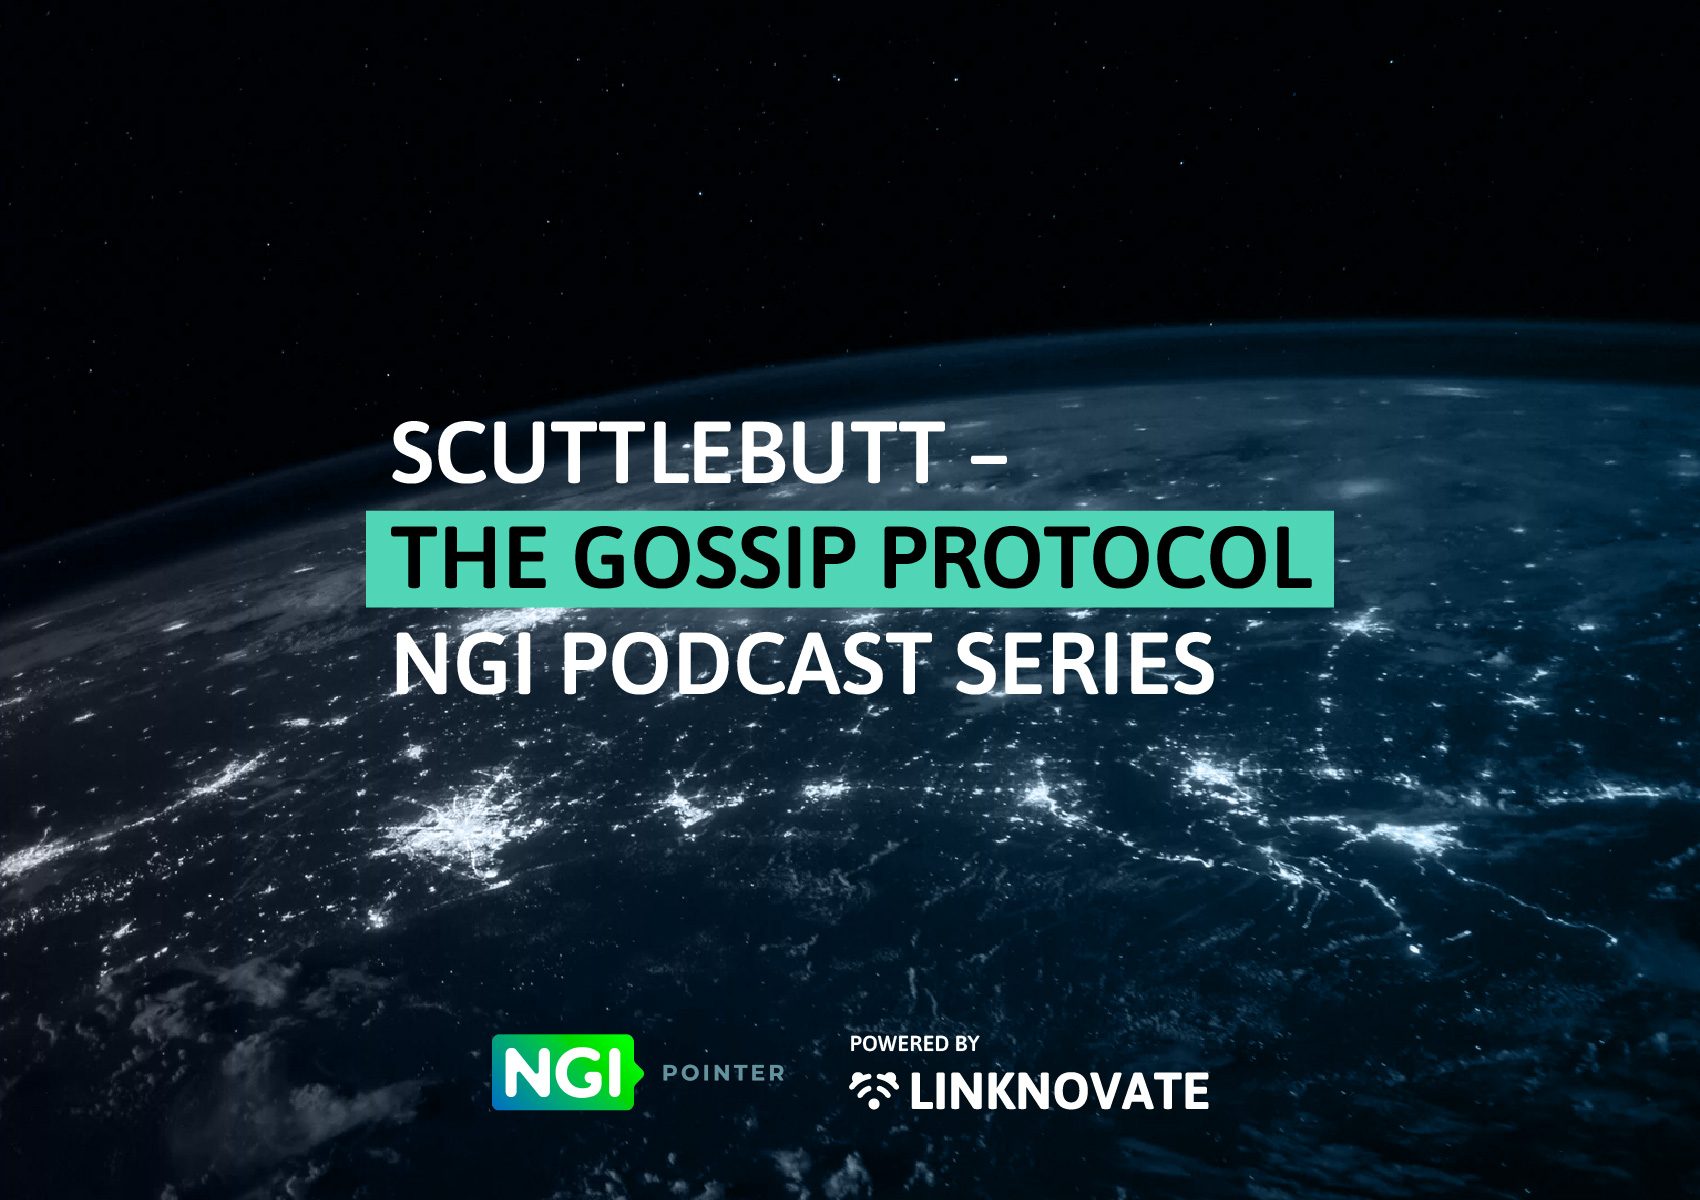 Scuttlebutt - The gossip protocol